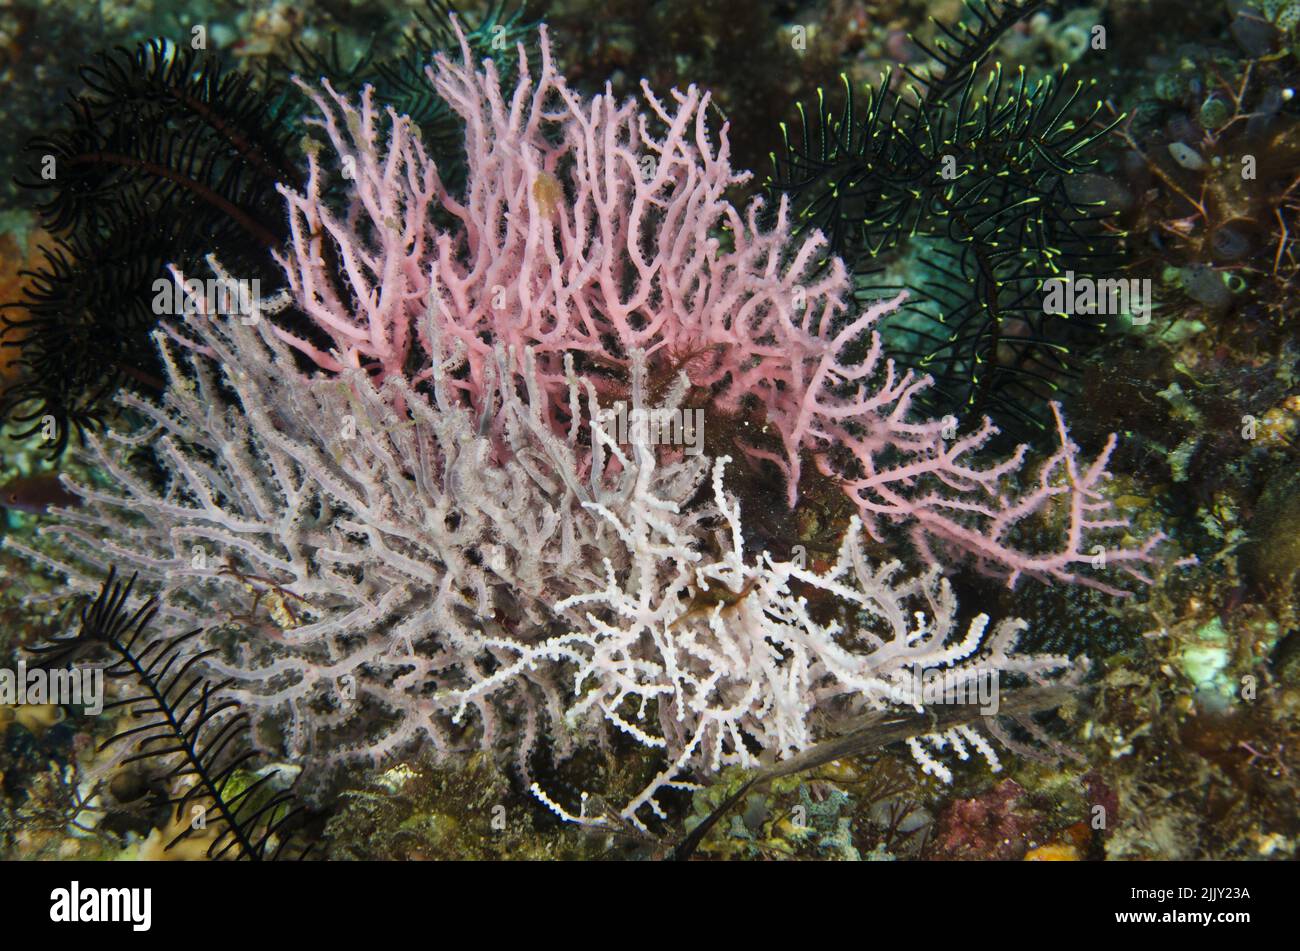 Corallo del ventilatore annodato, Melithaea sp., Melithaeidae, Anilao, Batangas, Filippine, Oceano Indo-pacifico, Asia Foto Stock